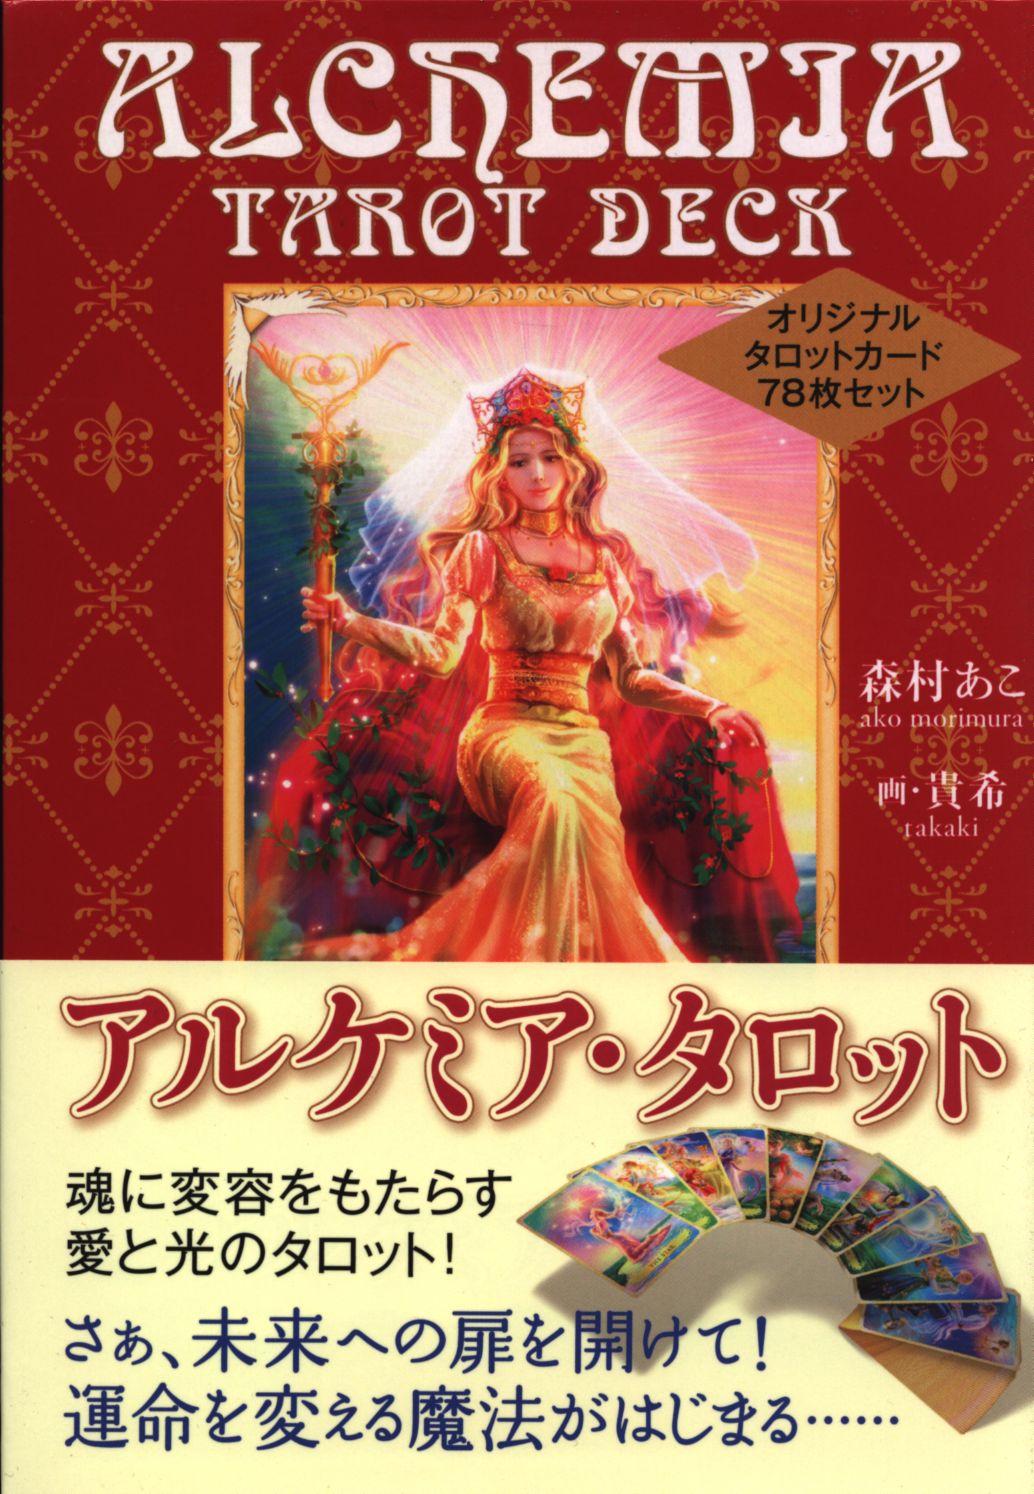 Alchemia Tarot Deck 78 Cards and Book set Ako Morimura Takaki